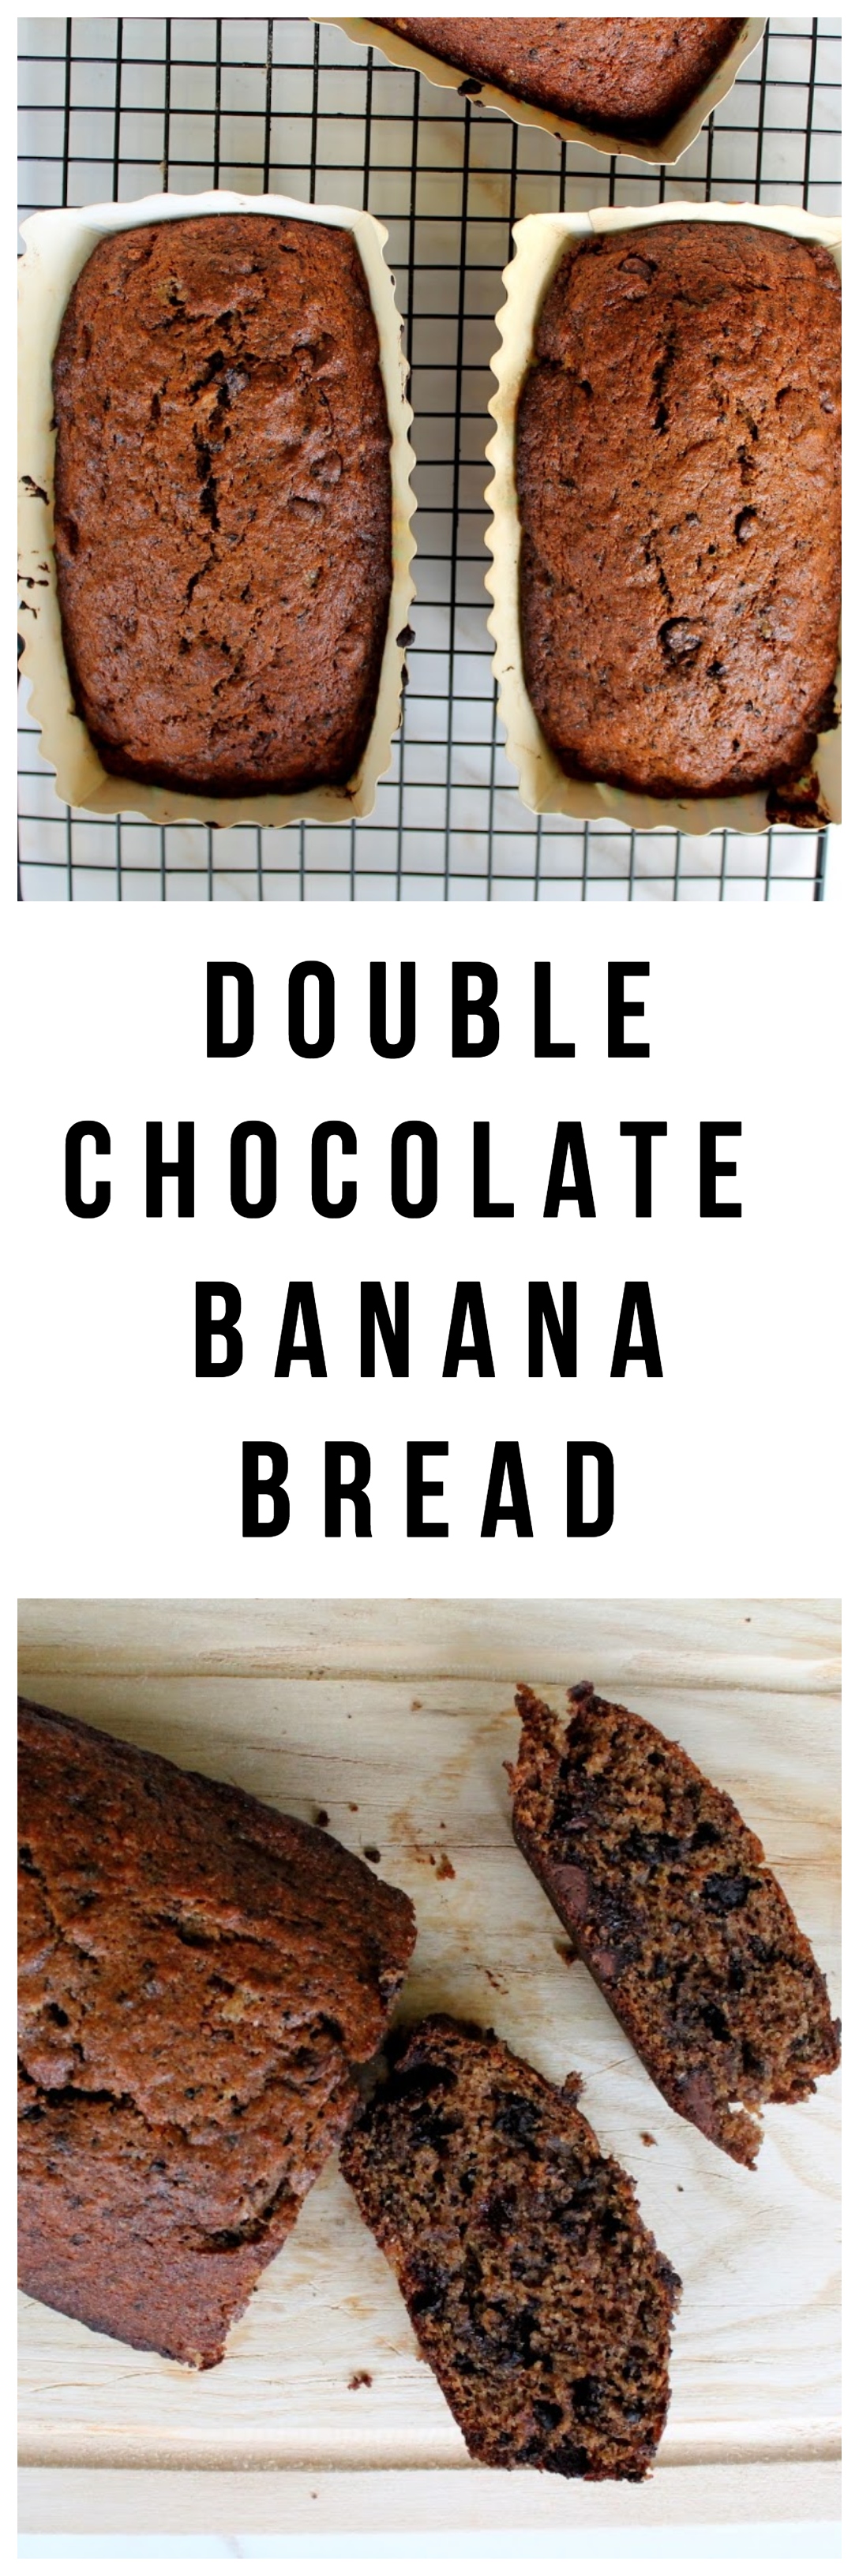 double chocolate banana bread